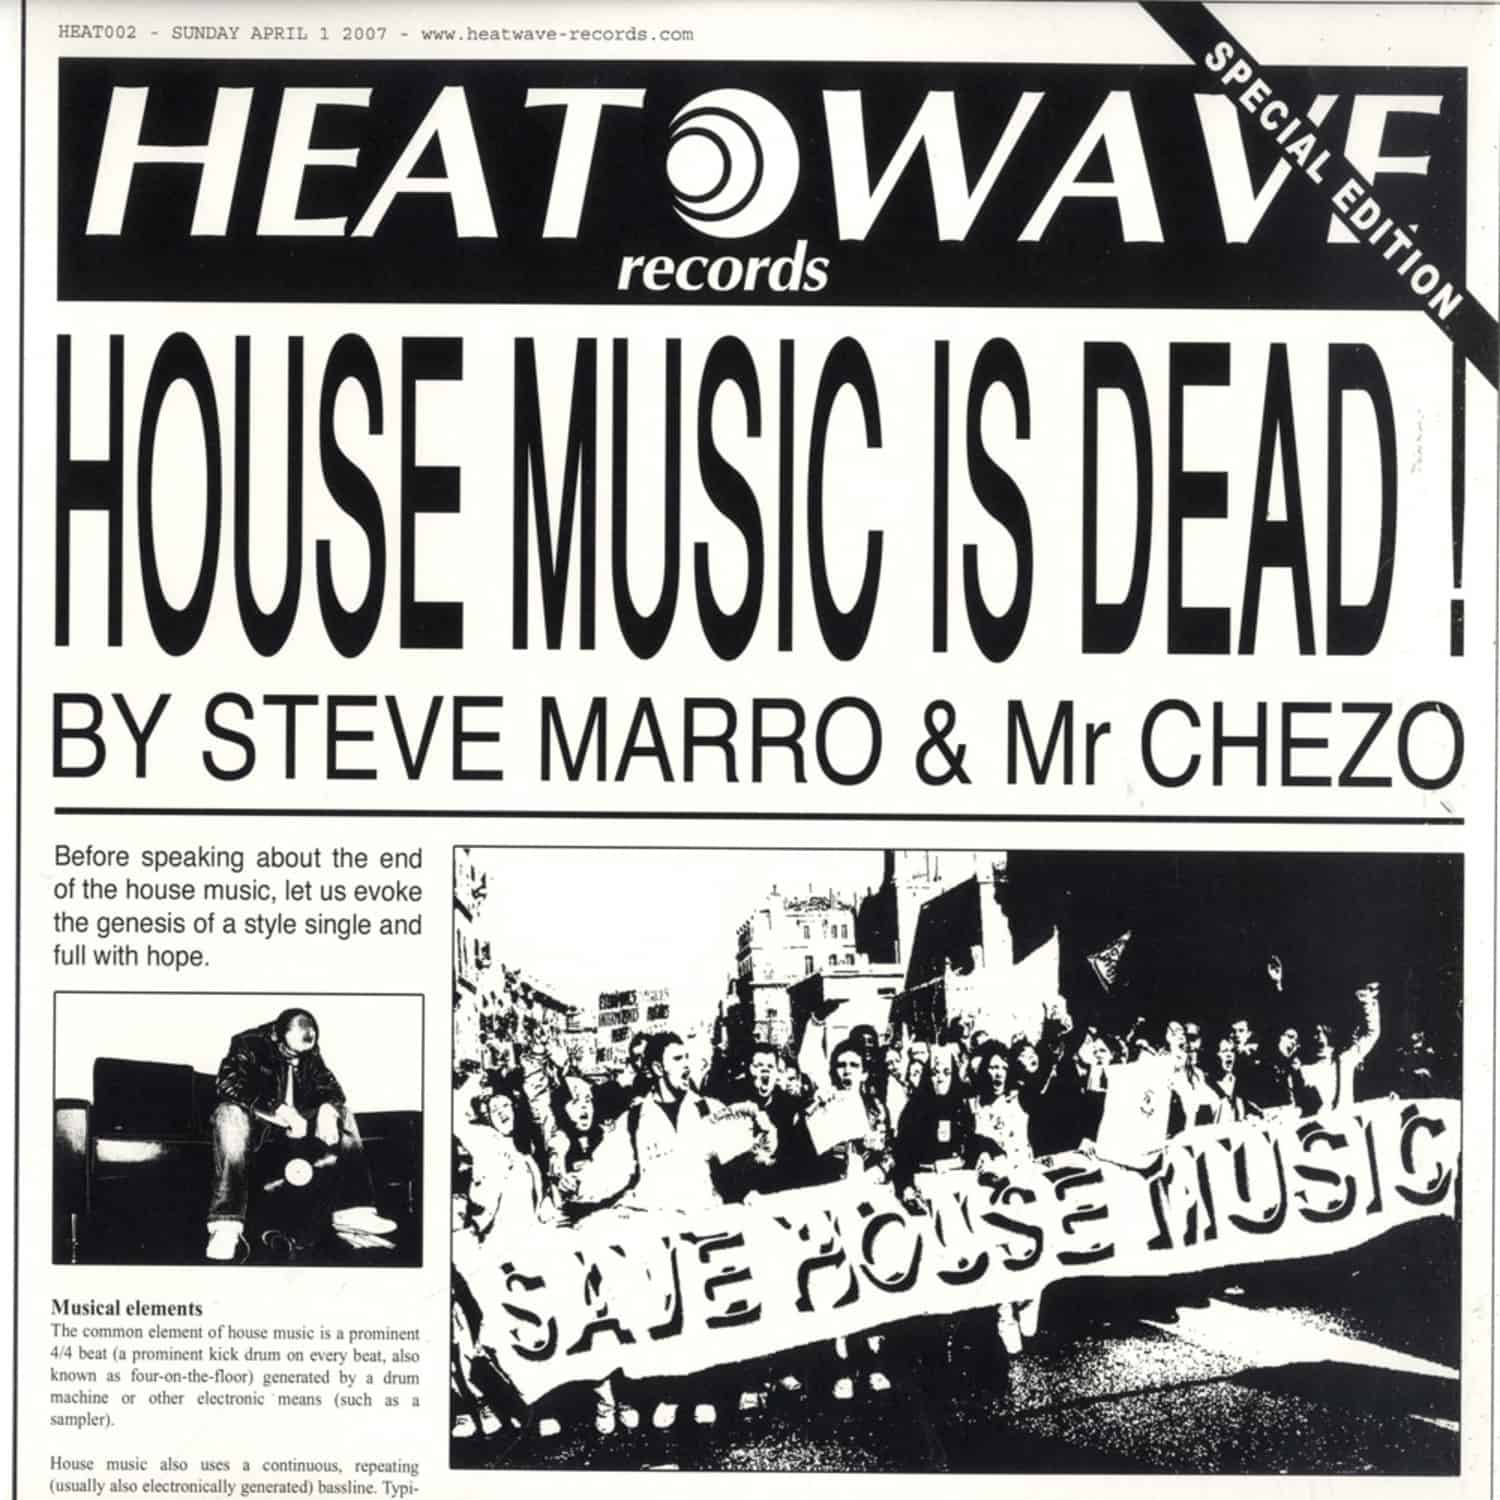 Steve Marro And Mr Chezo - HOUSE MUSIC IS DEAD